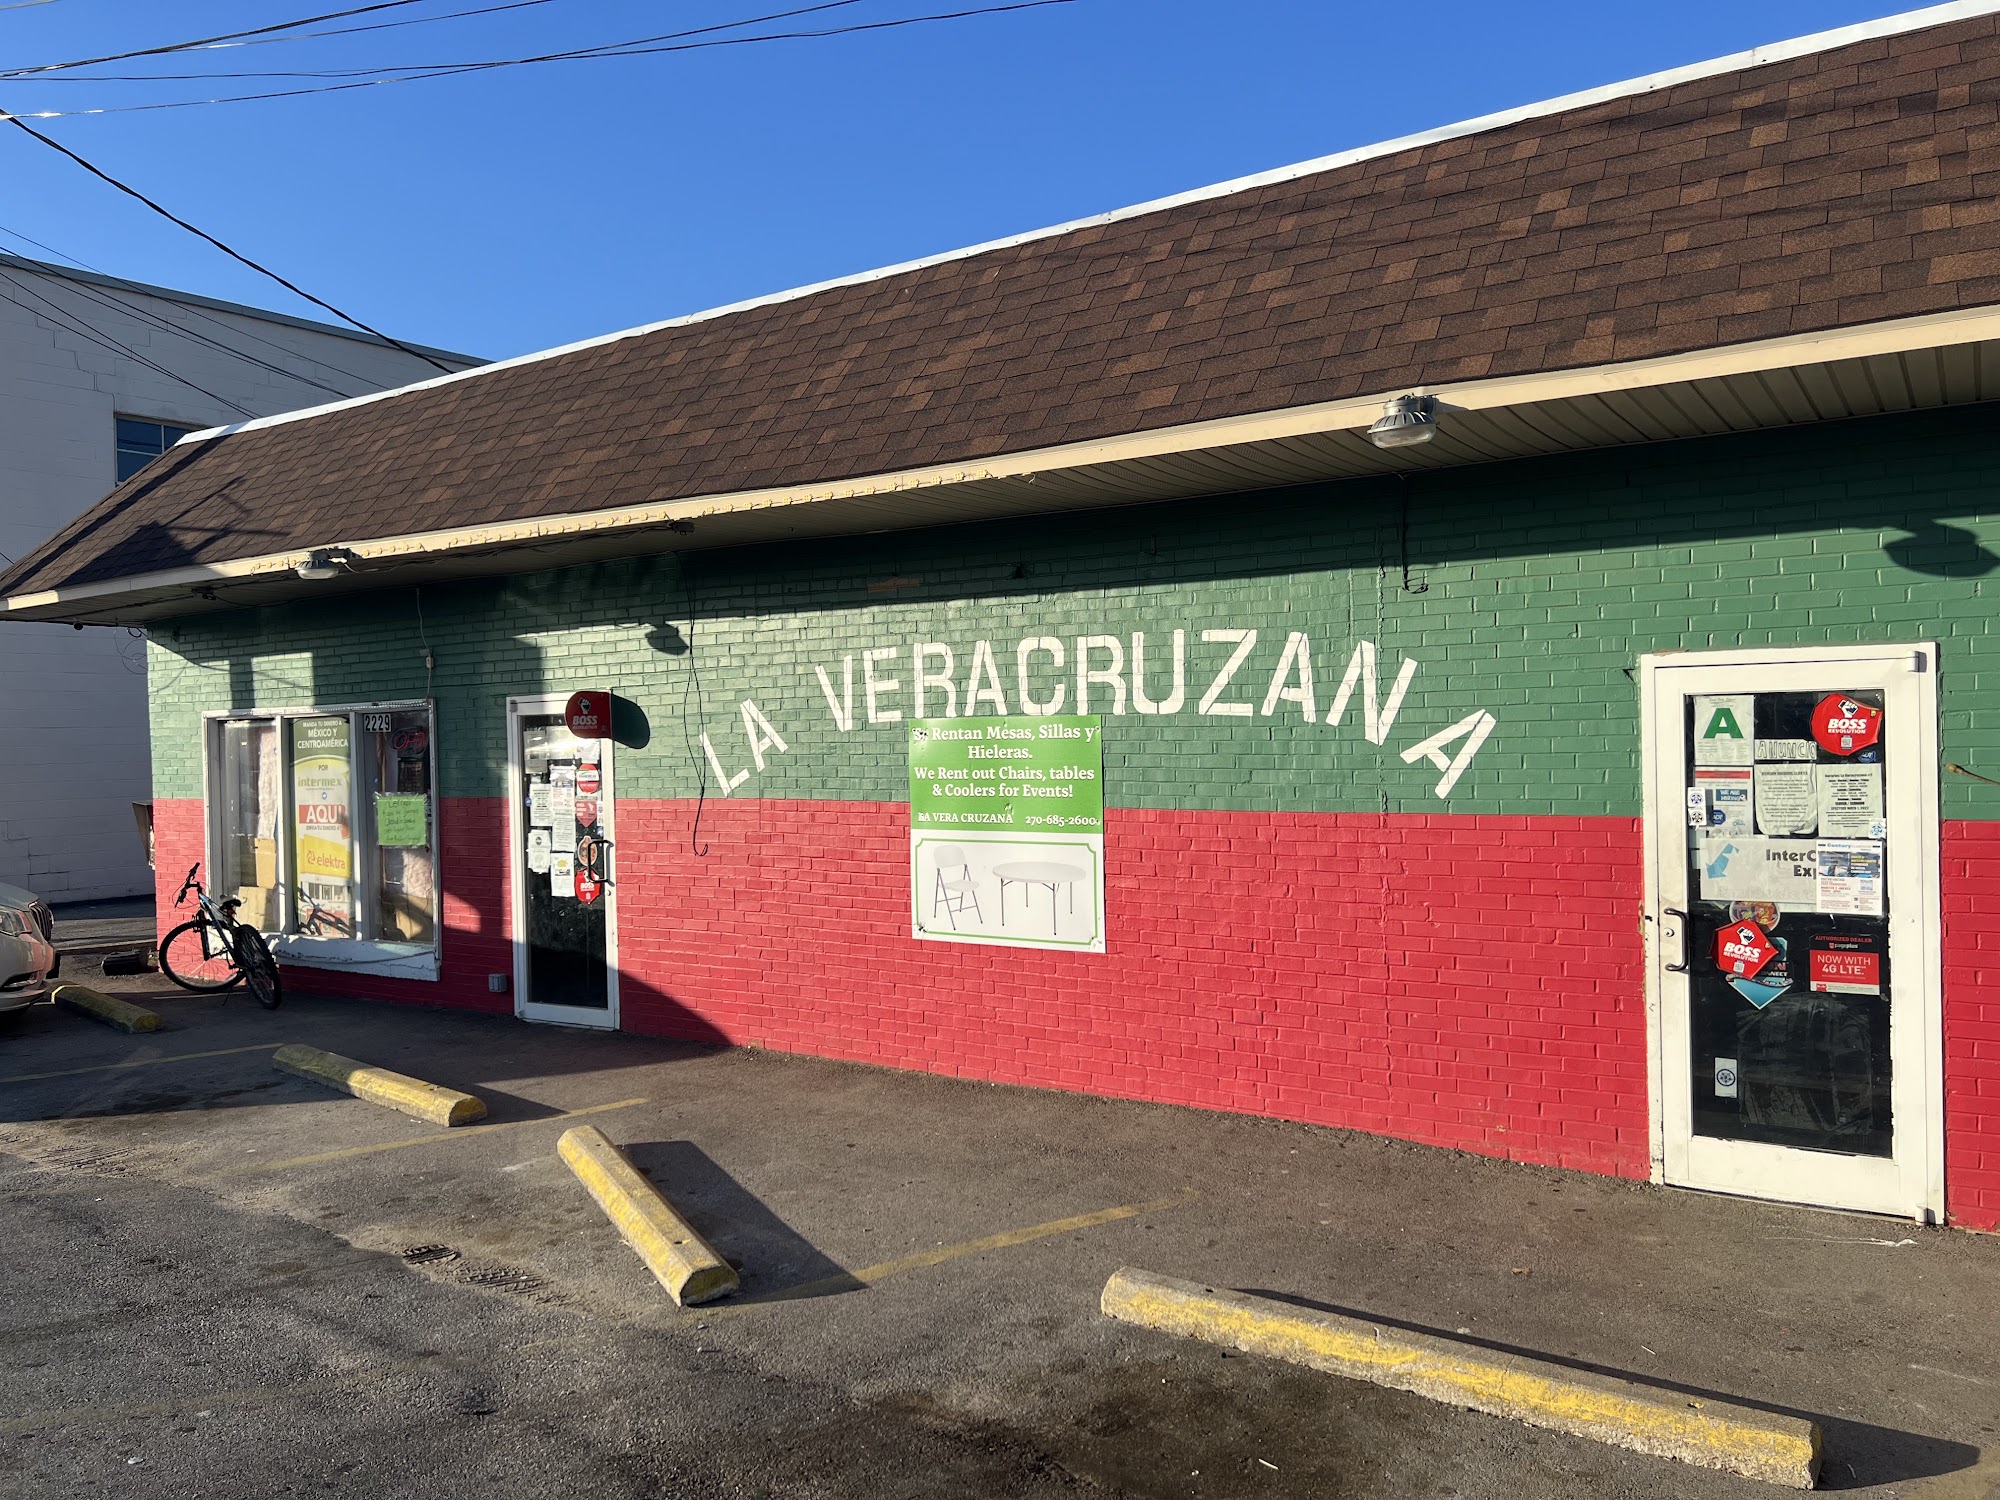 La Veracruzana Restaurant